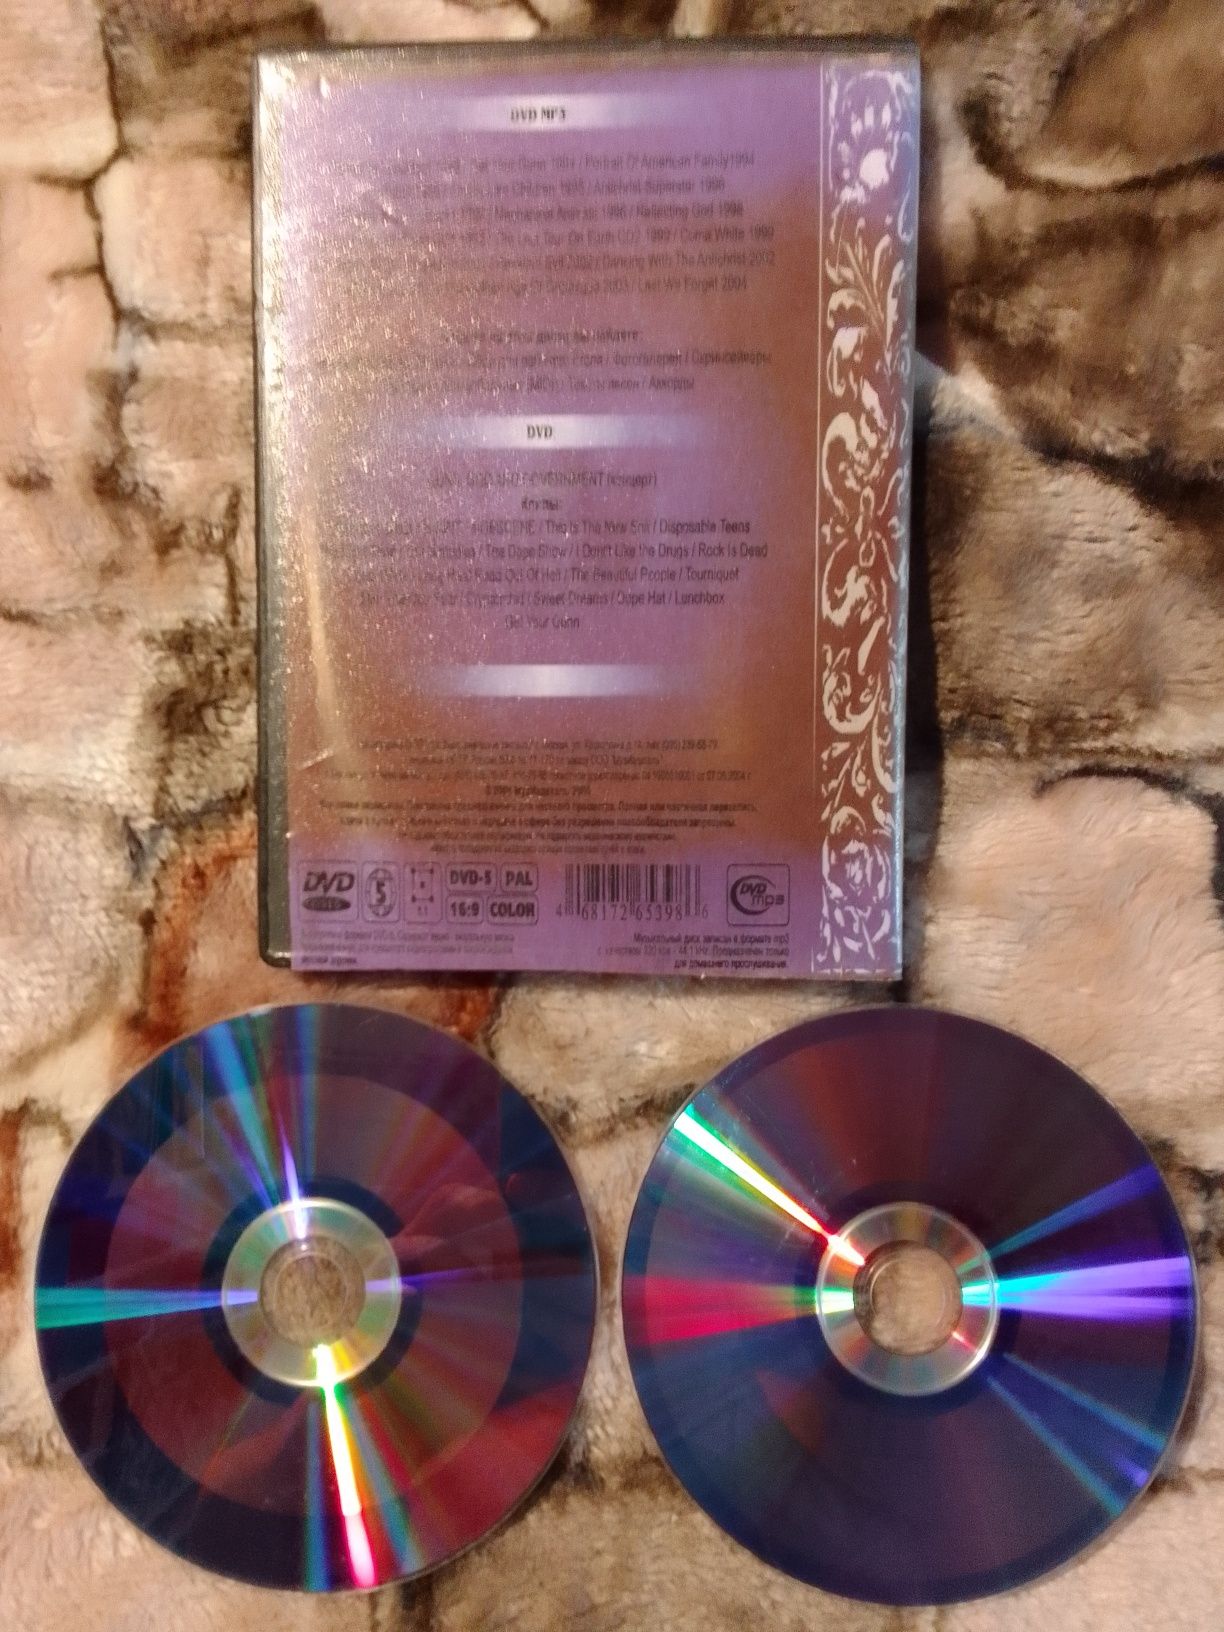 DVD/CD Marlin Manson 3диска одним лотом